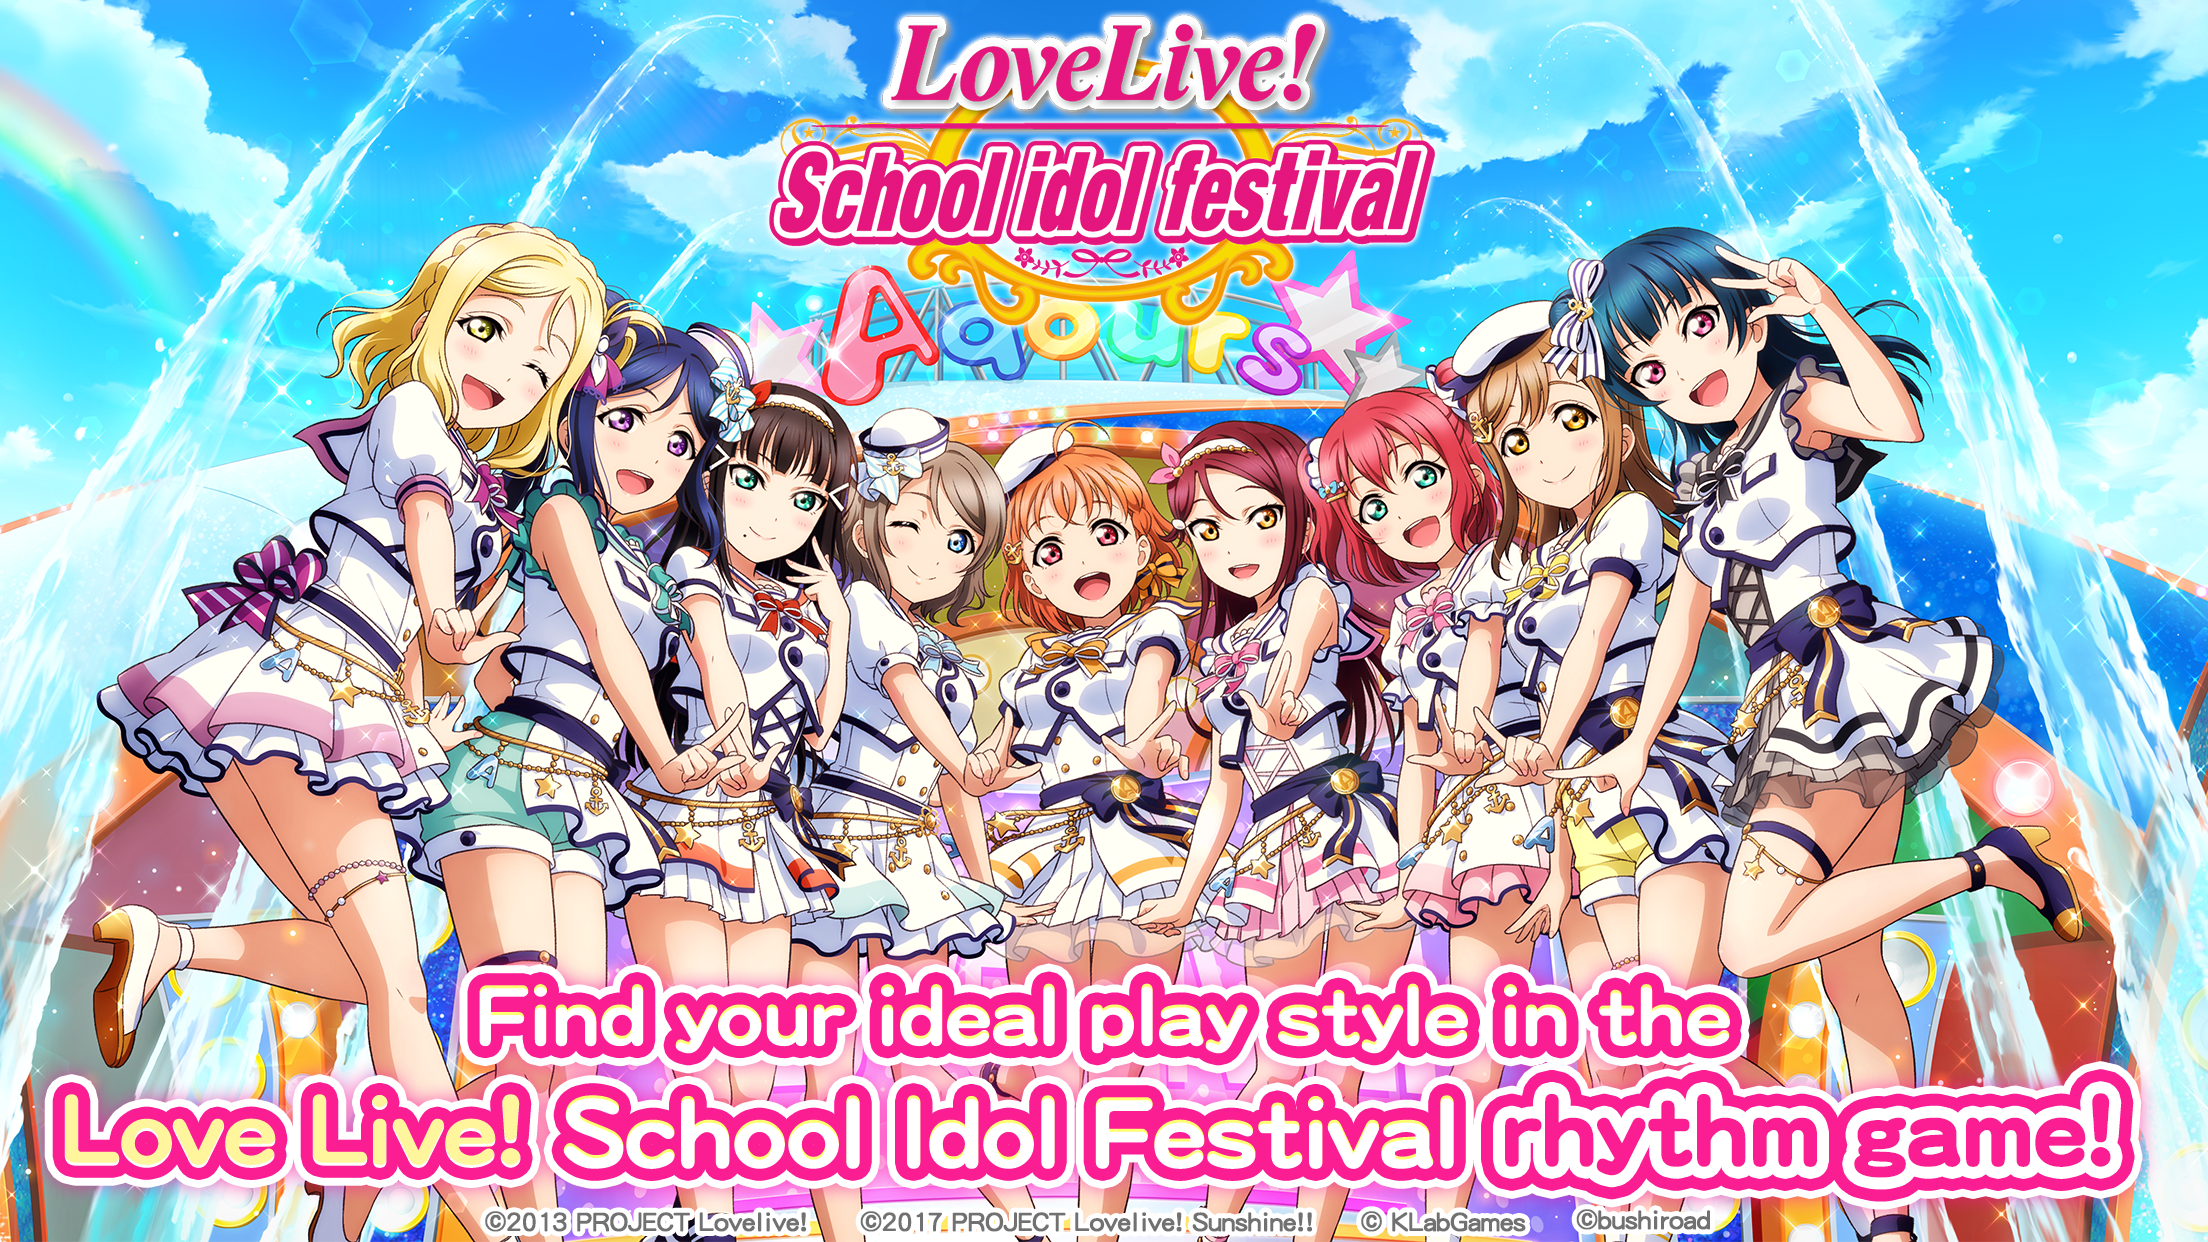 Screenshot 1 of Love Live!School idol festival 9.11